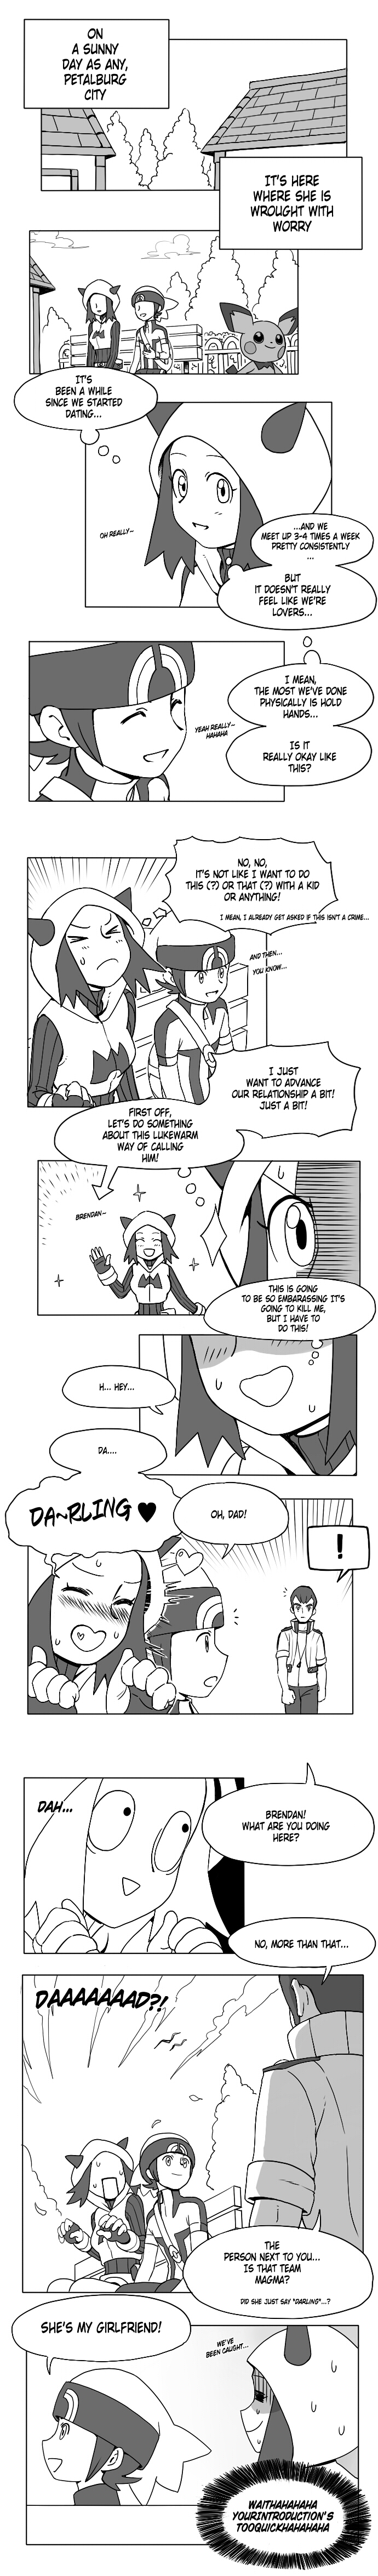 Pokémon Dating a Team Magma Grunt (Doujinshi) Ch. 6